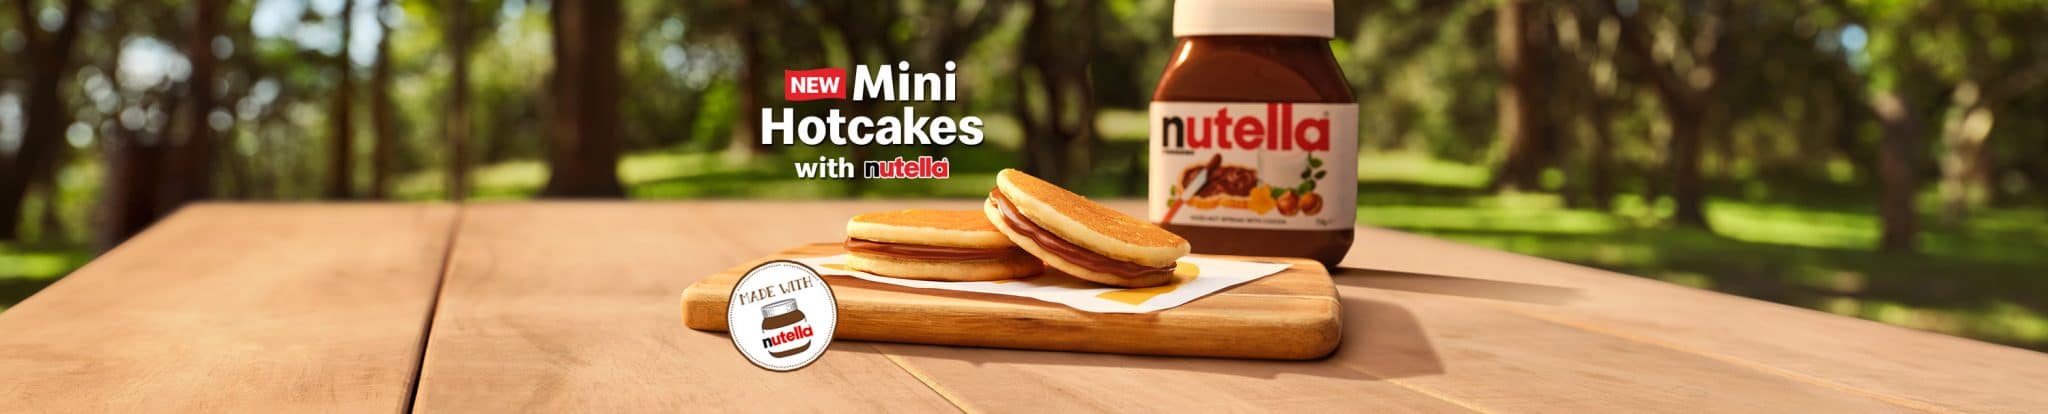 Mcdonalds Vouchers Mini Hotcakes Nutella